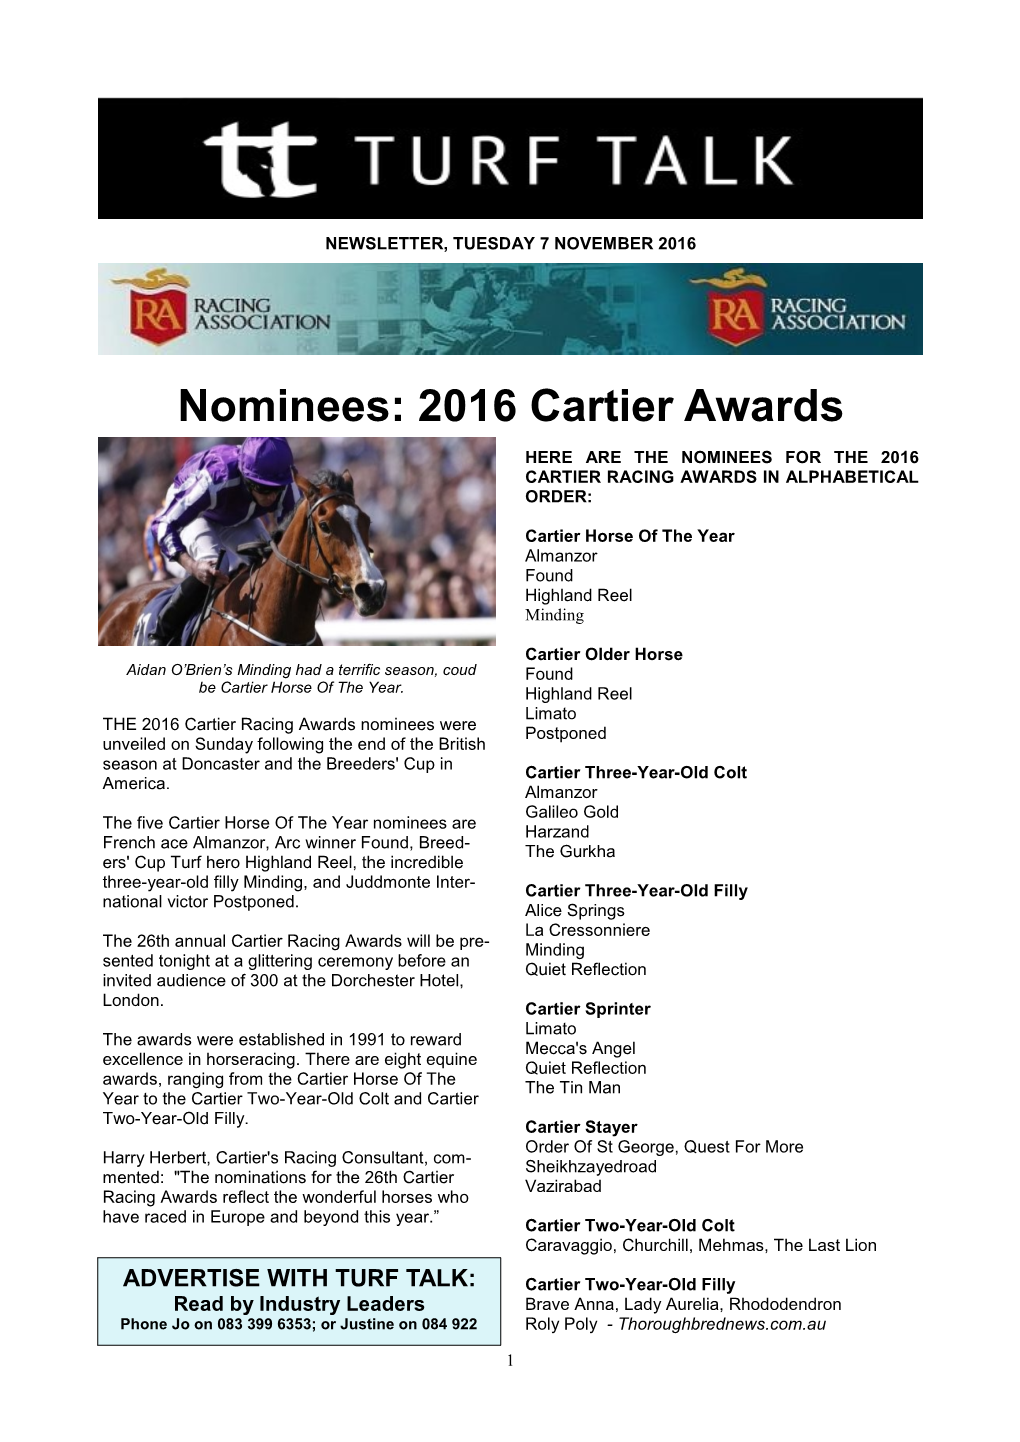 Nominees: 2016 Cartier Awards